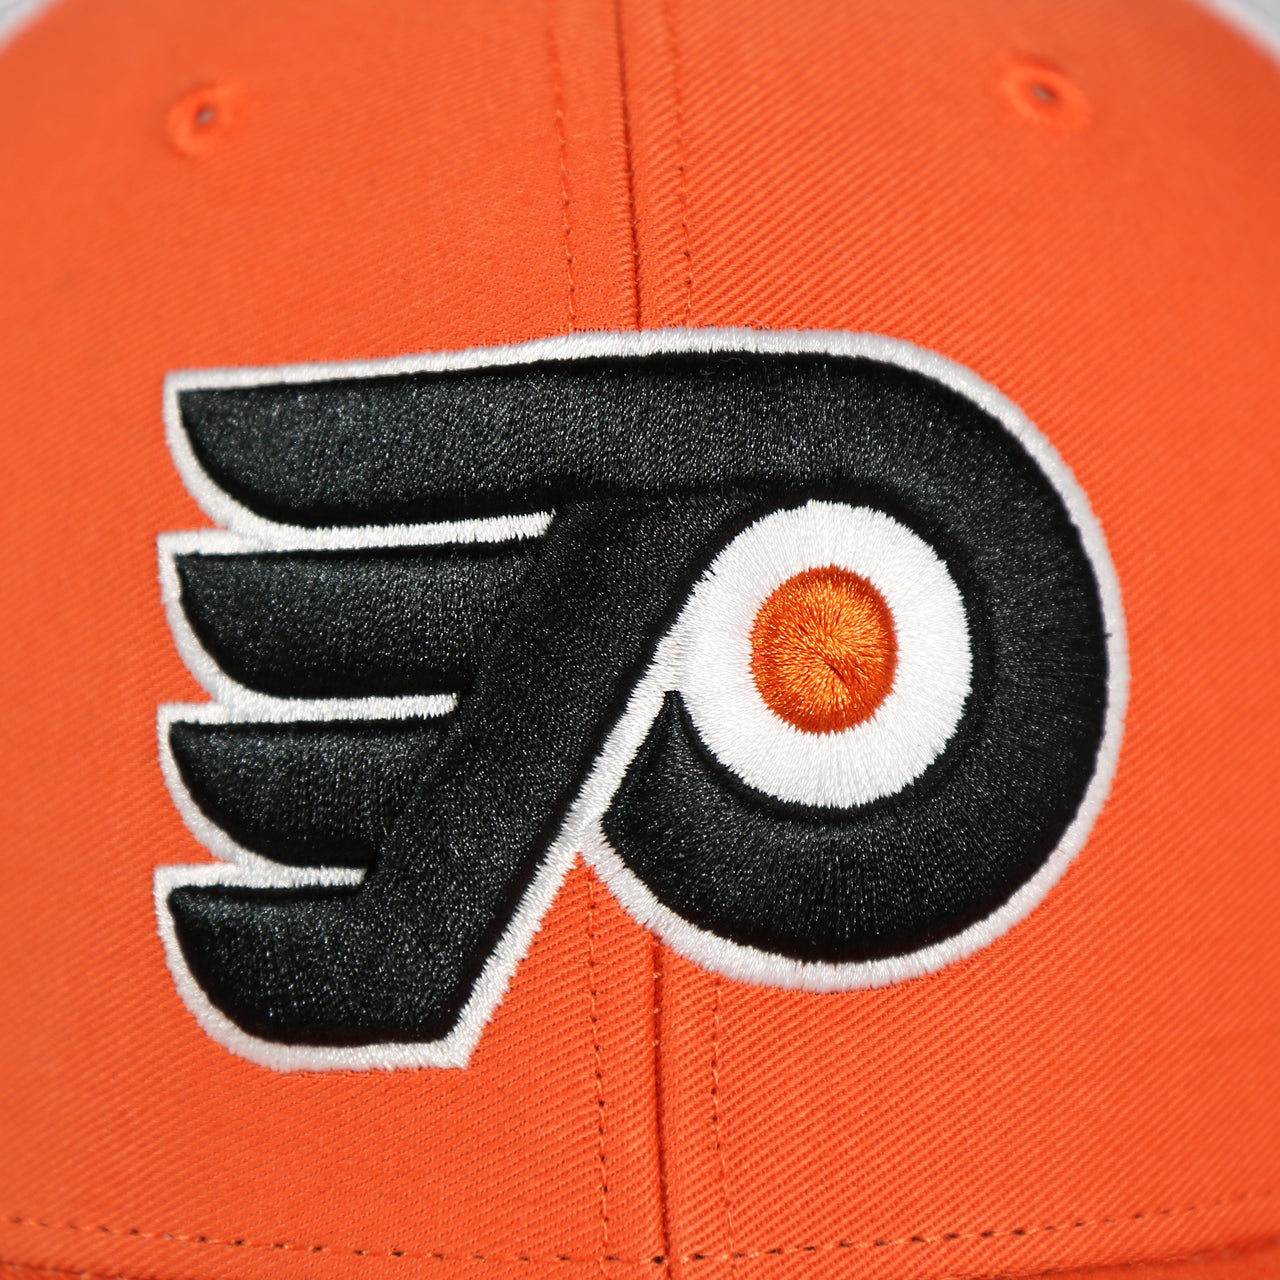 Philadelphia Flyers Meshback Orange/White Trucker Snapback Hat